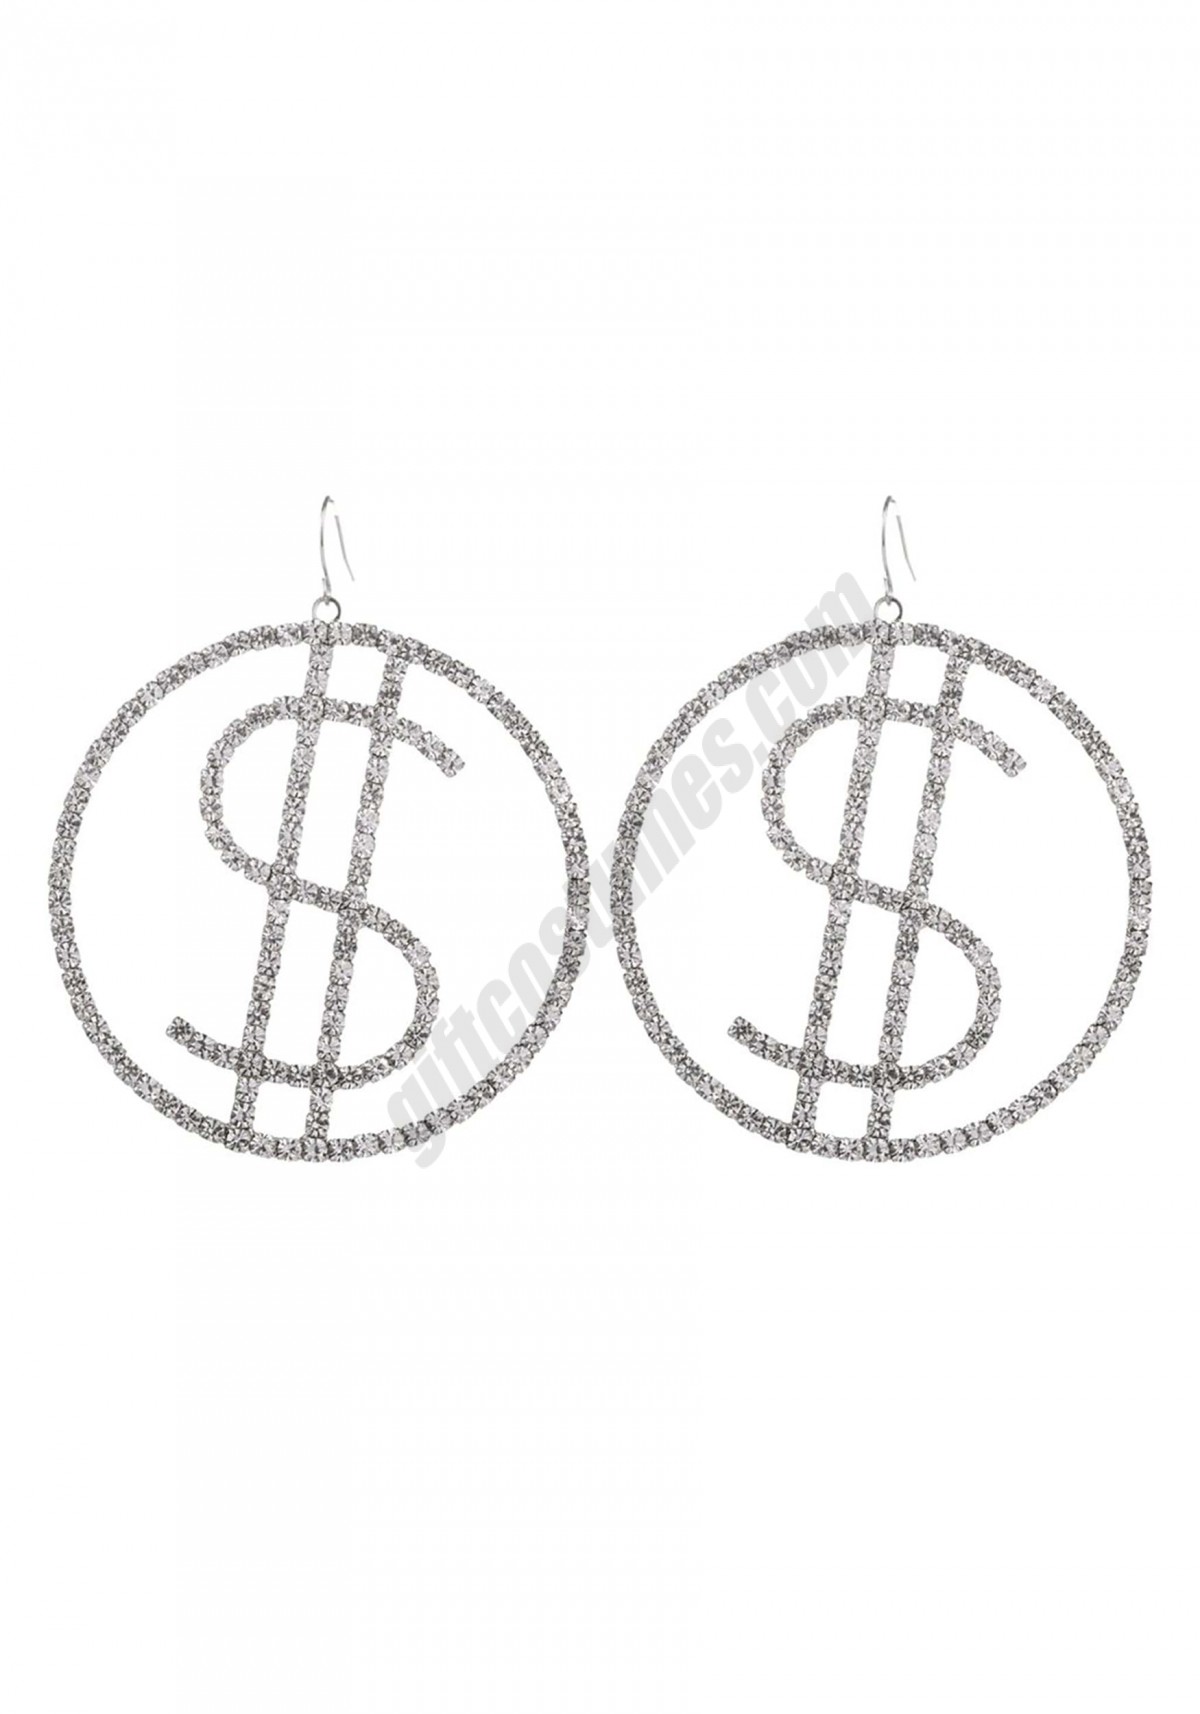 Dollar Sign Rhinestone Costume Earrings Promotions - -0